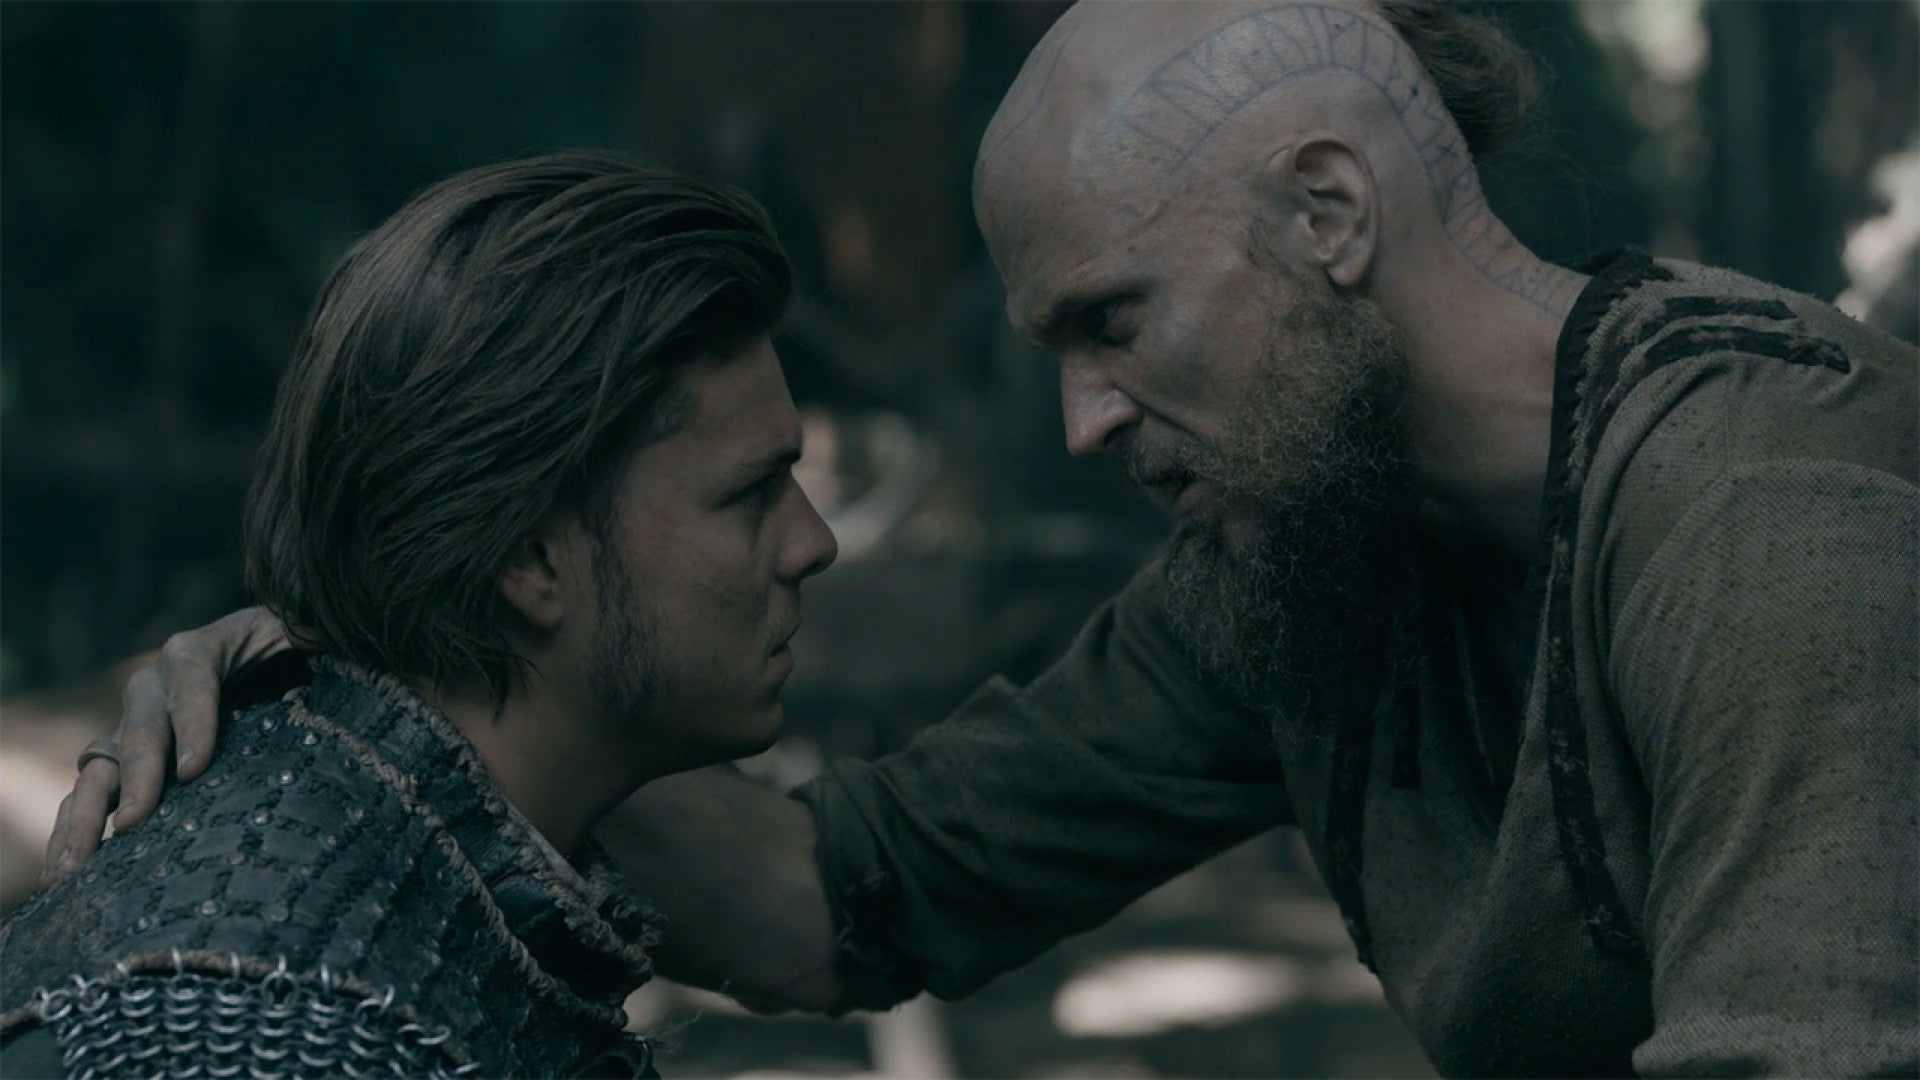 Alex Hogh Andersen Interview: Vikings Season 5 and Ivar the Boneless